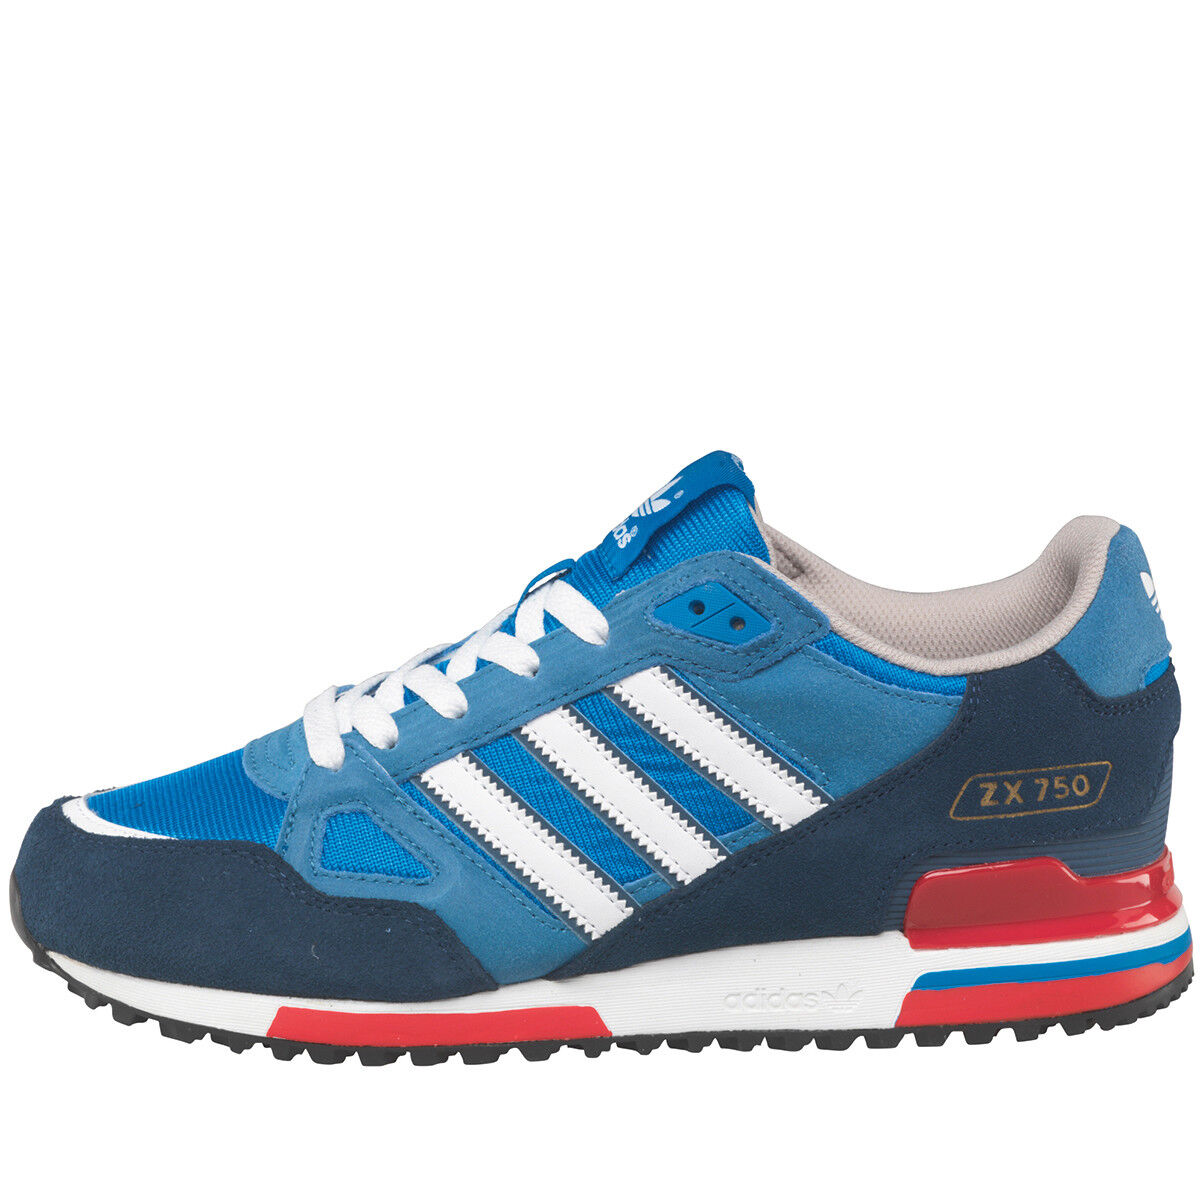 Odiseo tener Identificar Adidas Original Mens Zx 750 Sneakers Bluebird/Blue/Navy/Red/White/White/Blue  | eBay